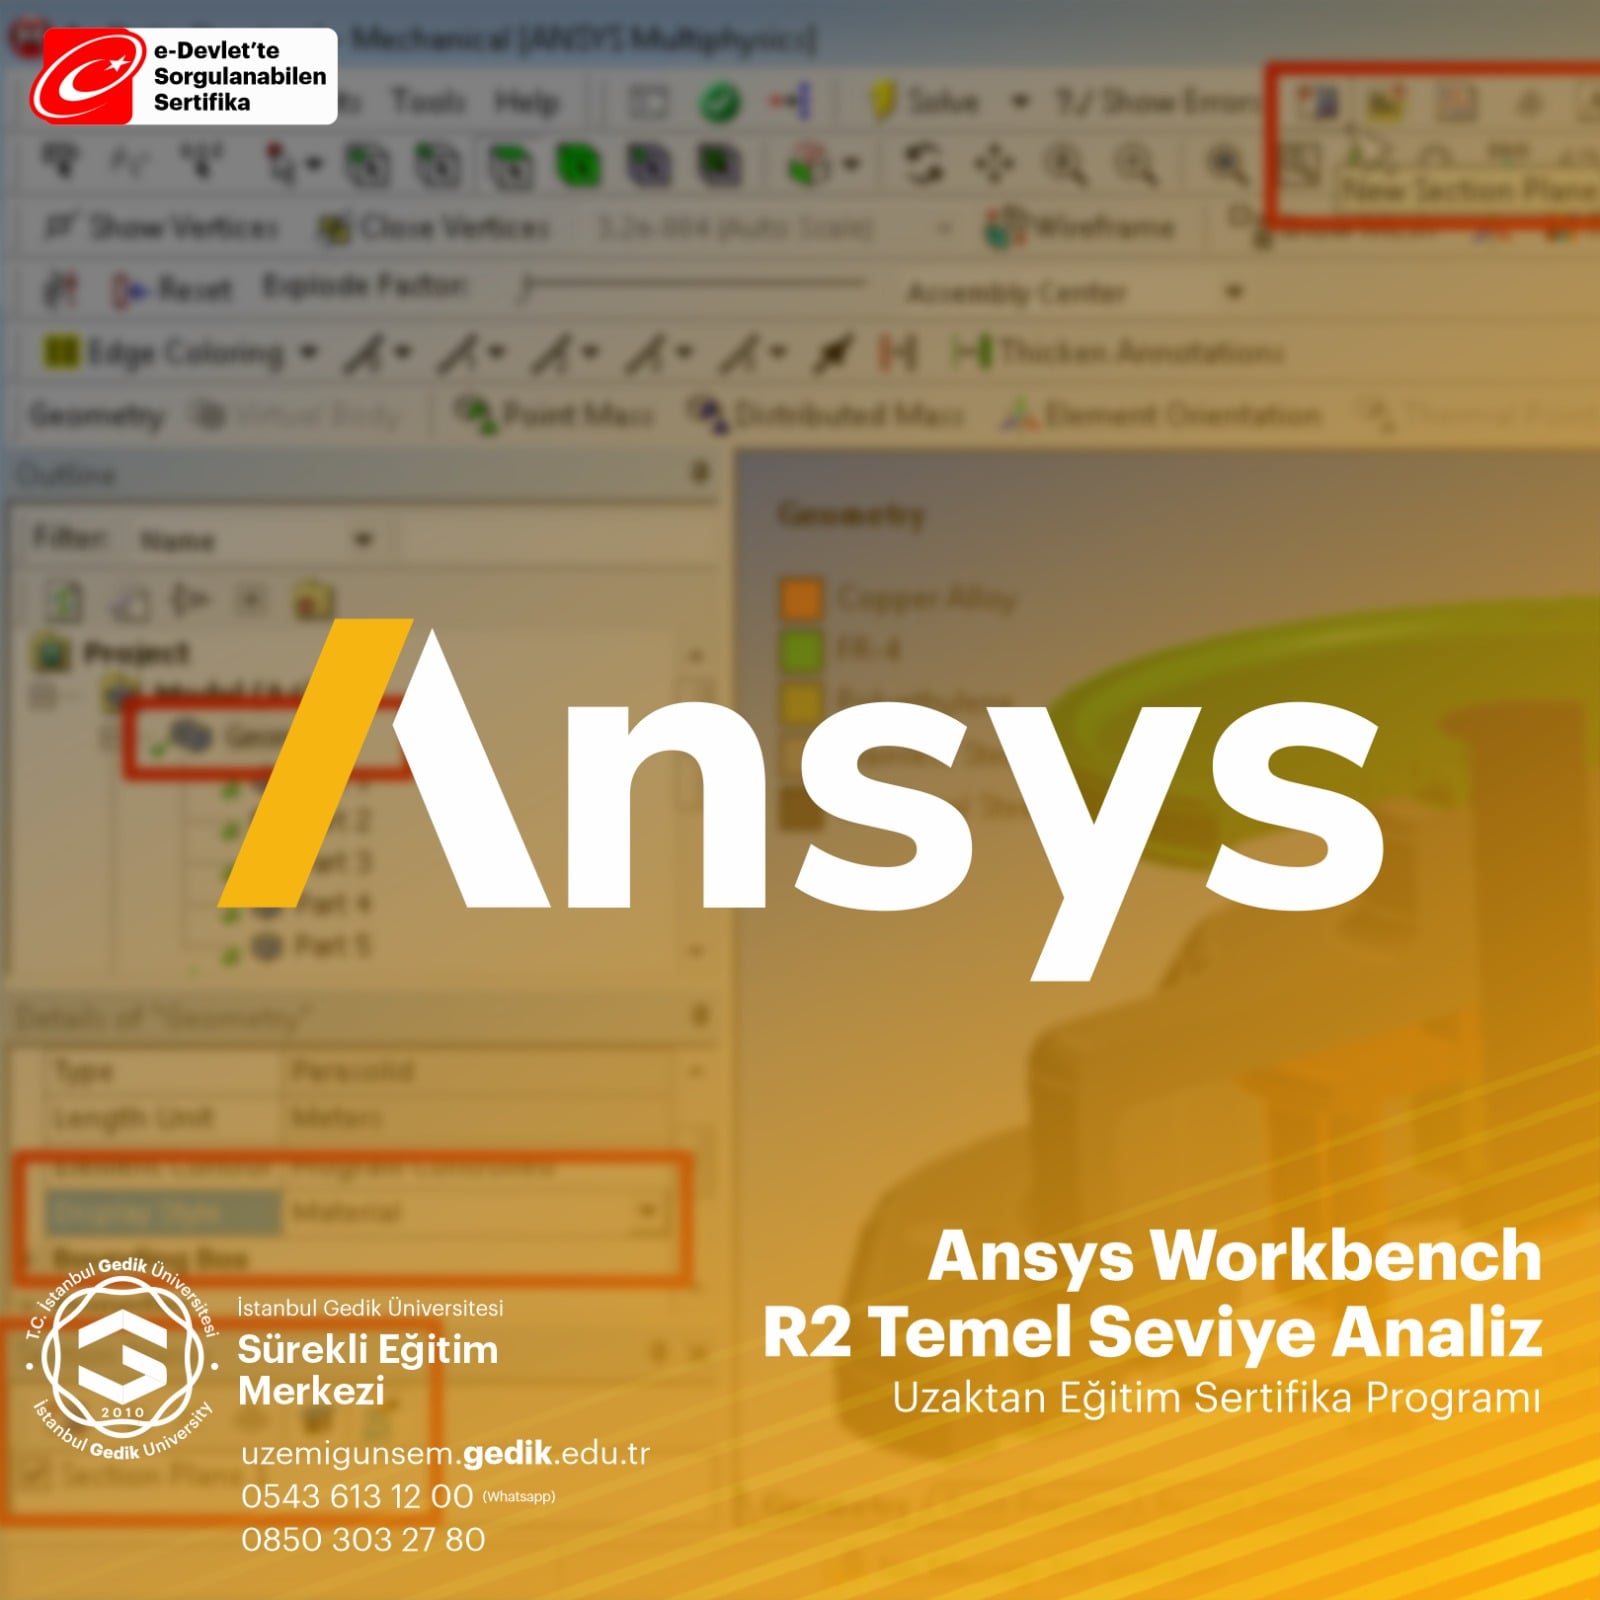 Ansys Workbench Eğitimi 2020 R2 Temel seviye analiz Sertifika Programı